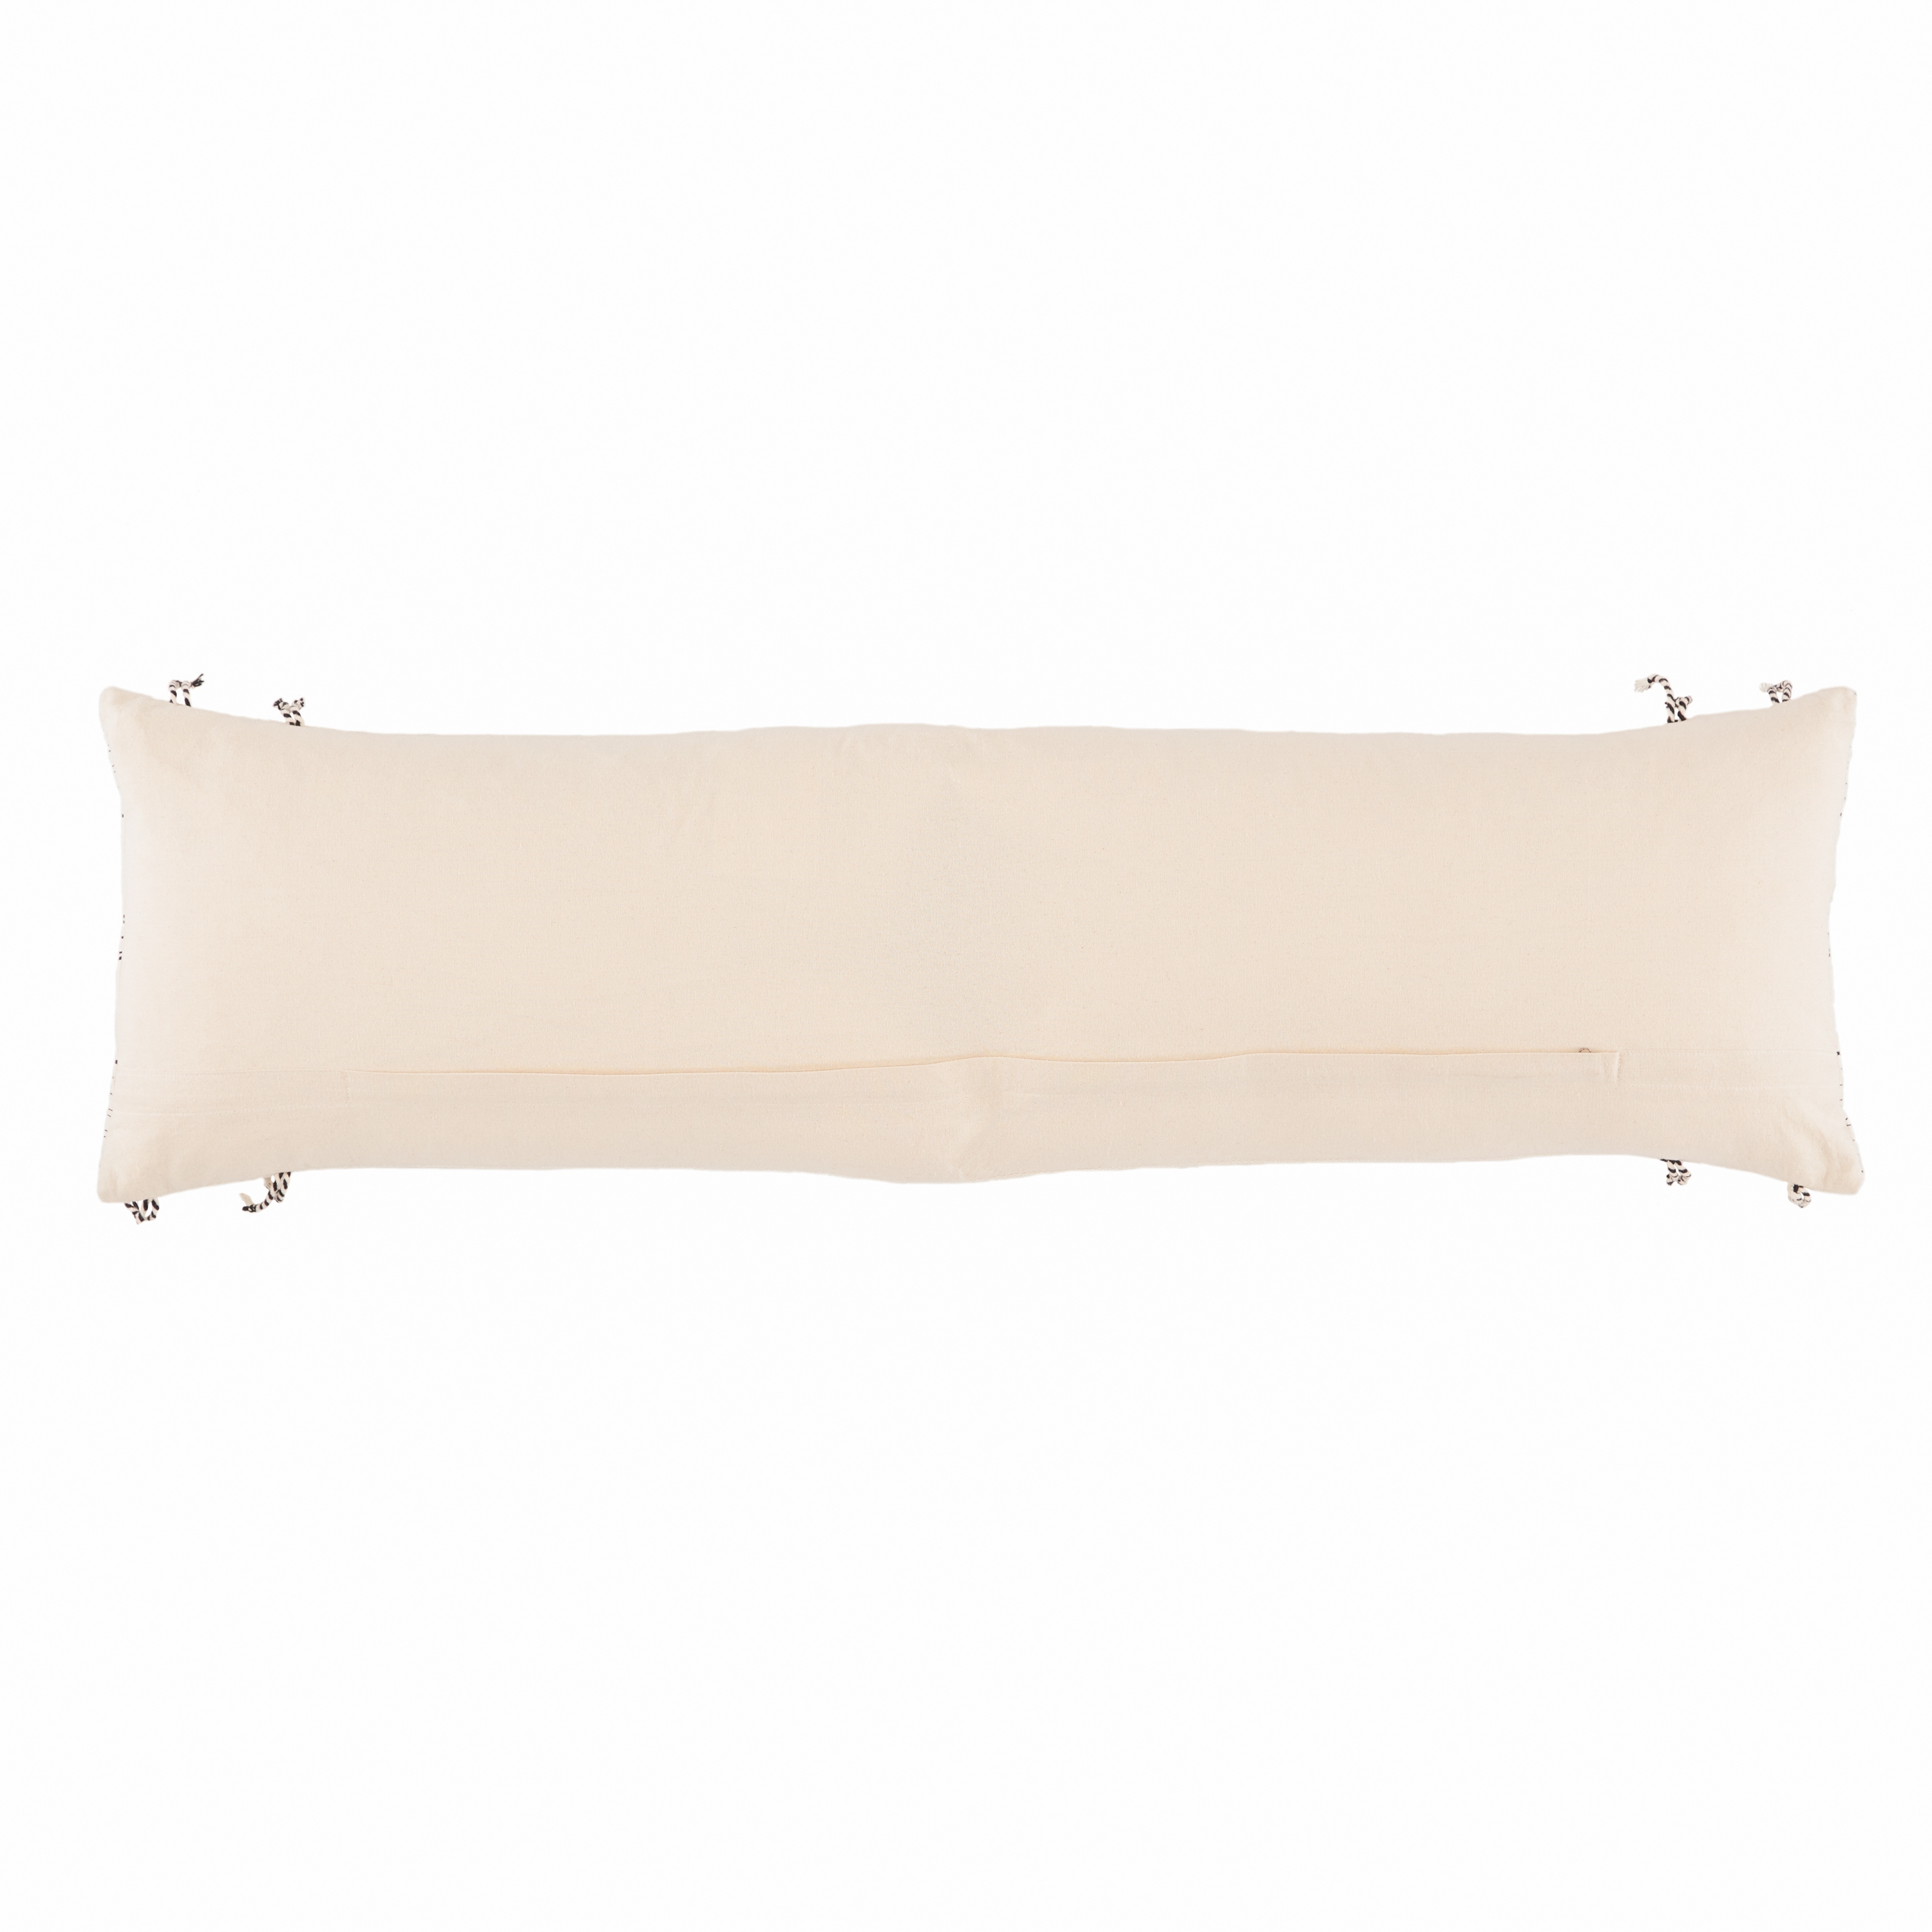 Zeliang Long Lumber Pillow Cover, 48" x 13" - Image 1